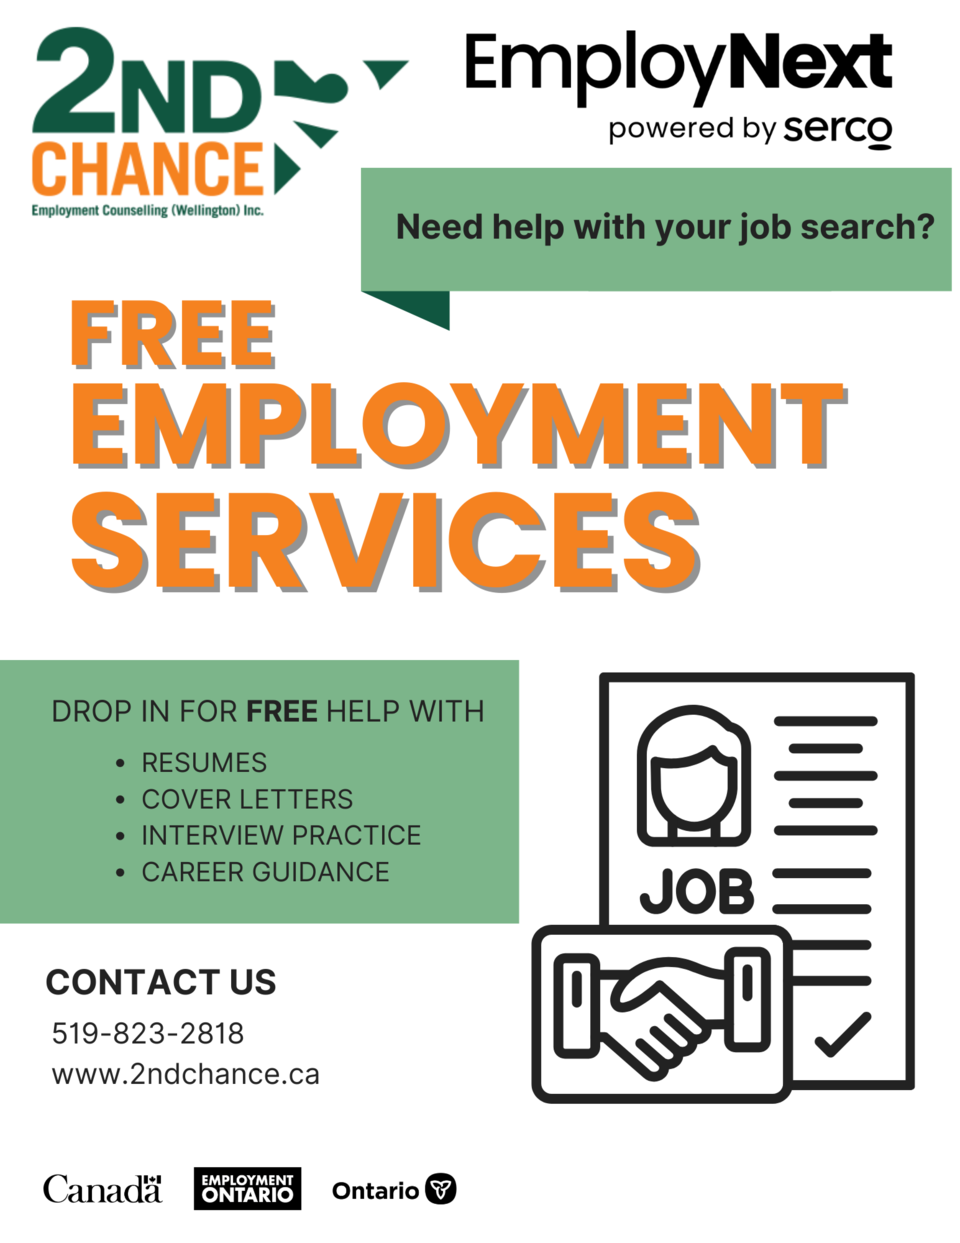 2nd-chance-employment